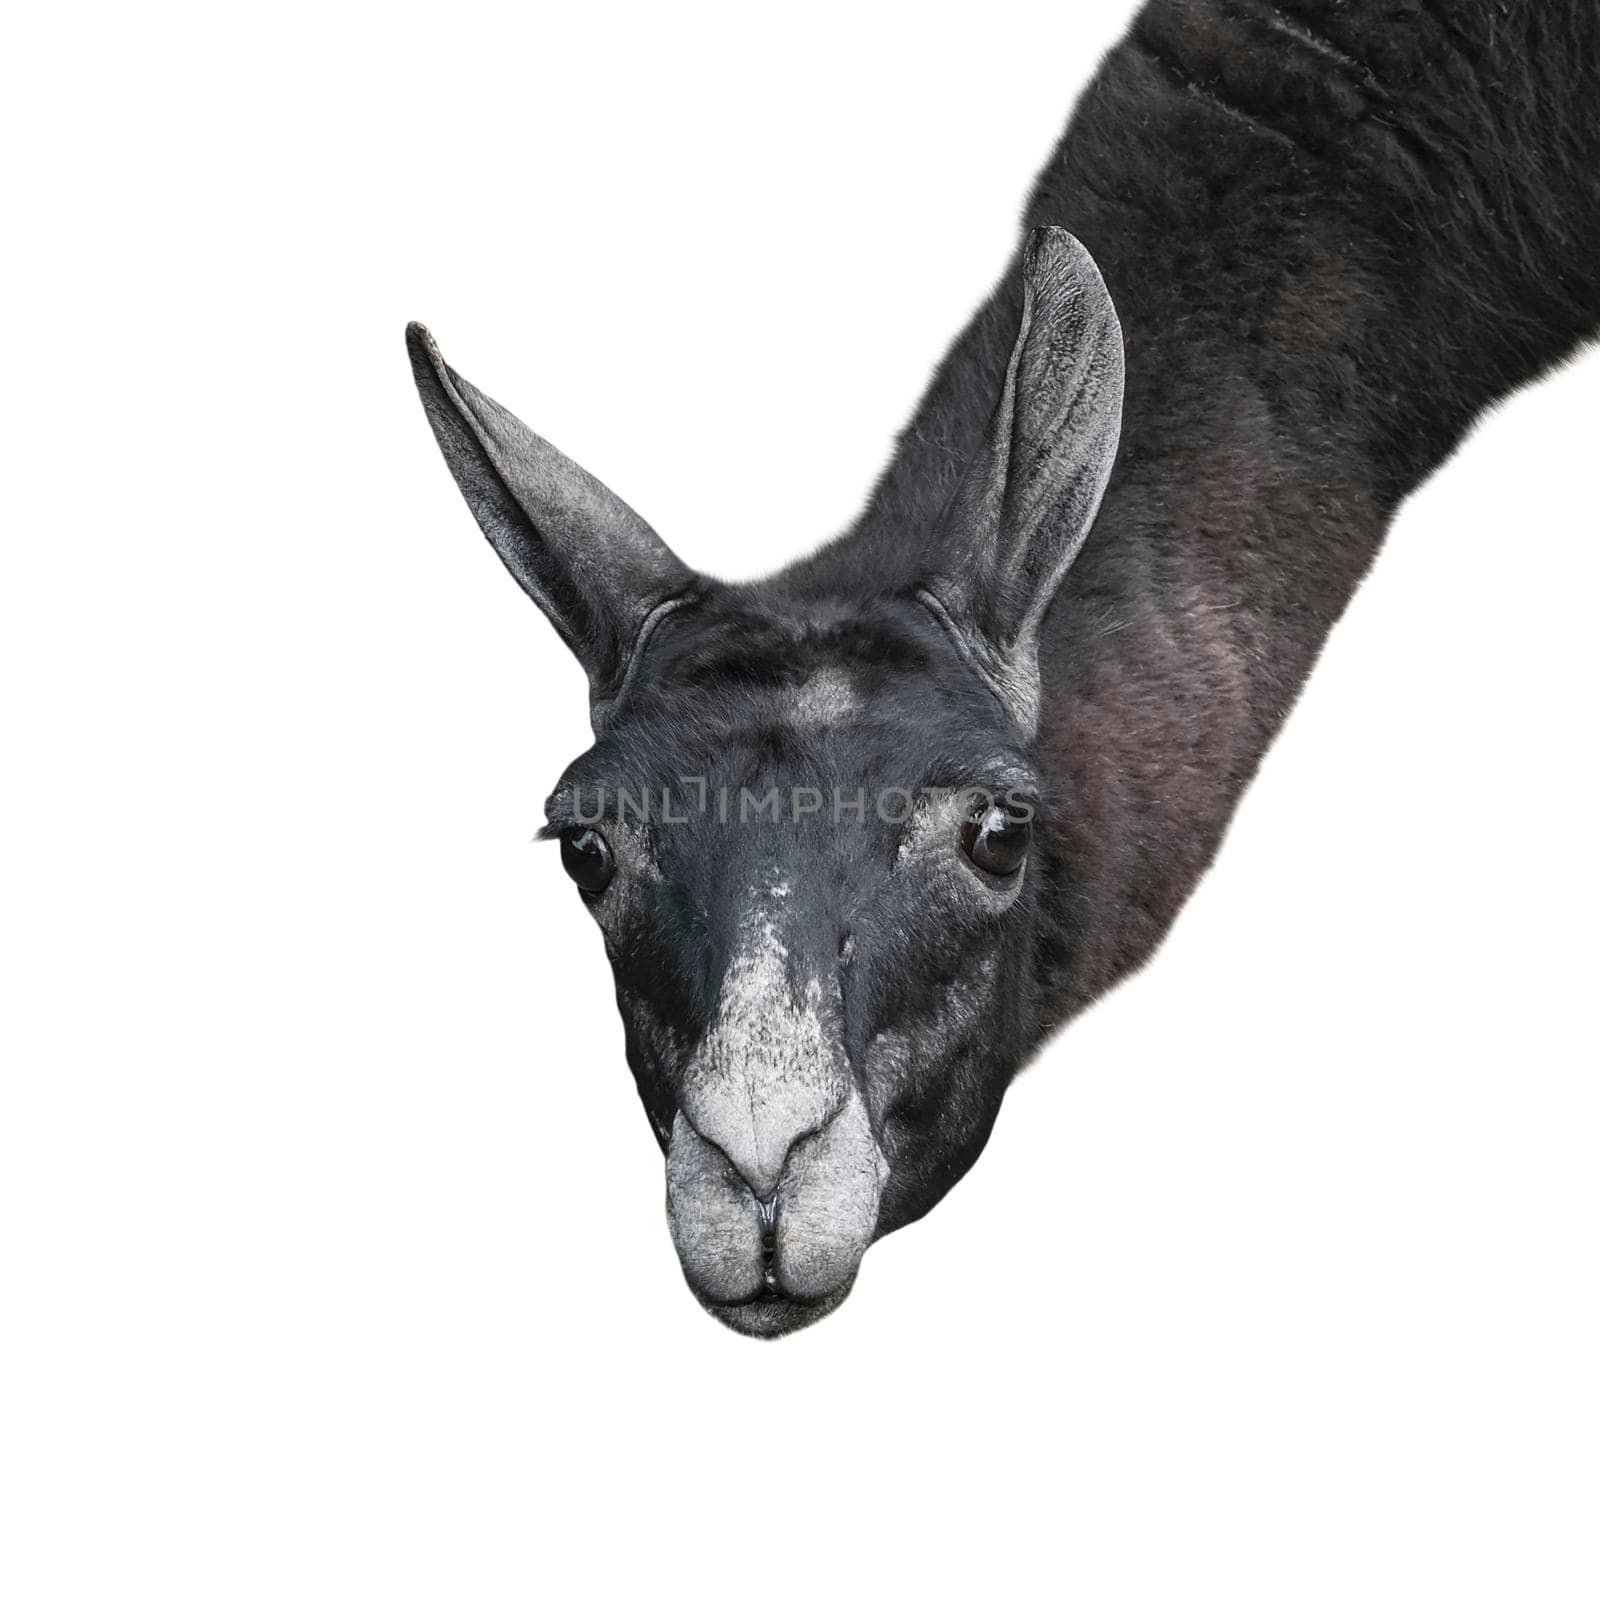 Funny llama or alpaca isolated on white background. Zoo animals